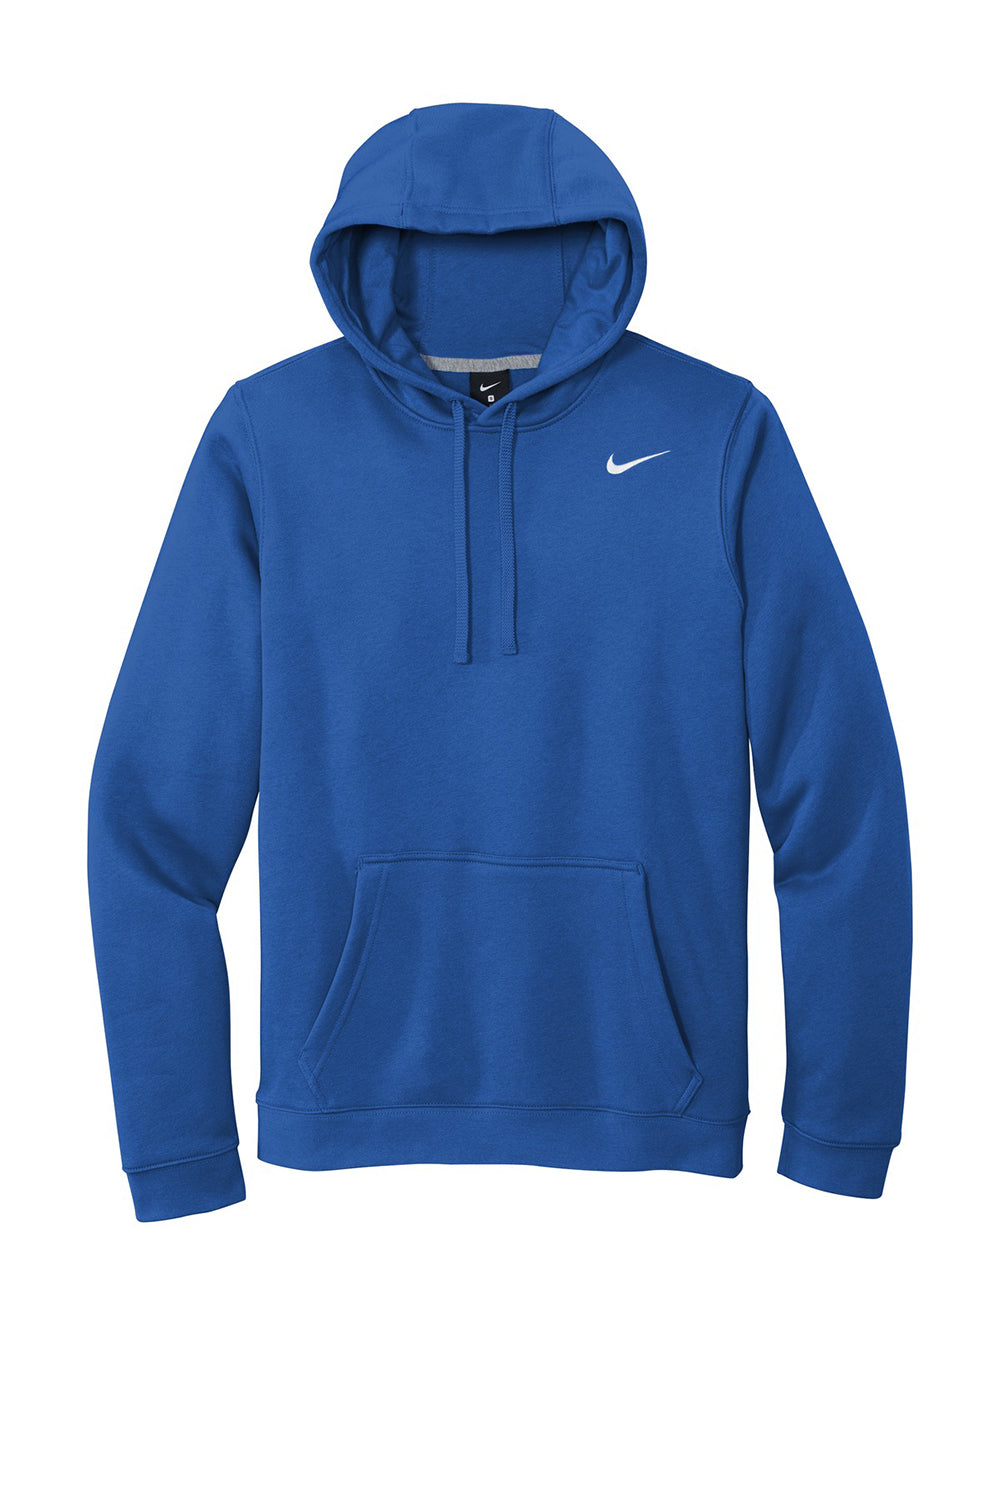 Nike CJ1611 Mens Club Fleece Hooded Sweatshirt Hoodie Royal Blue Flat Front